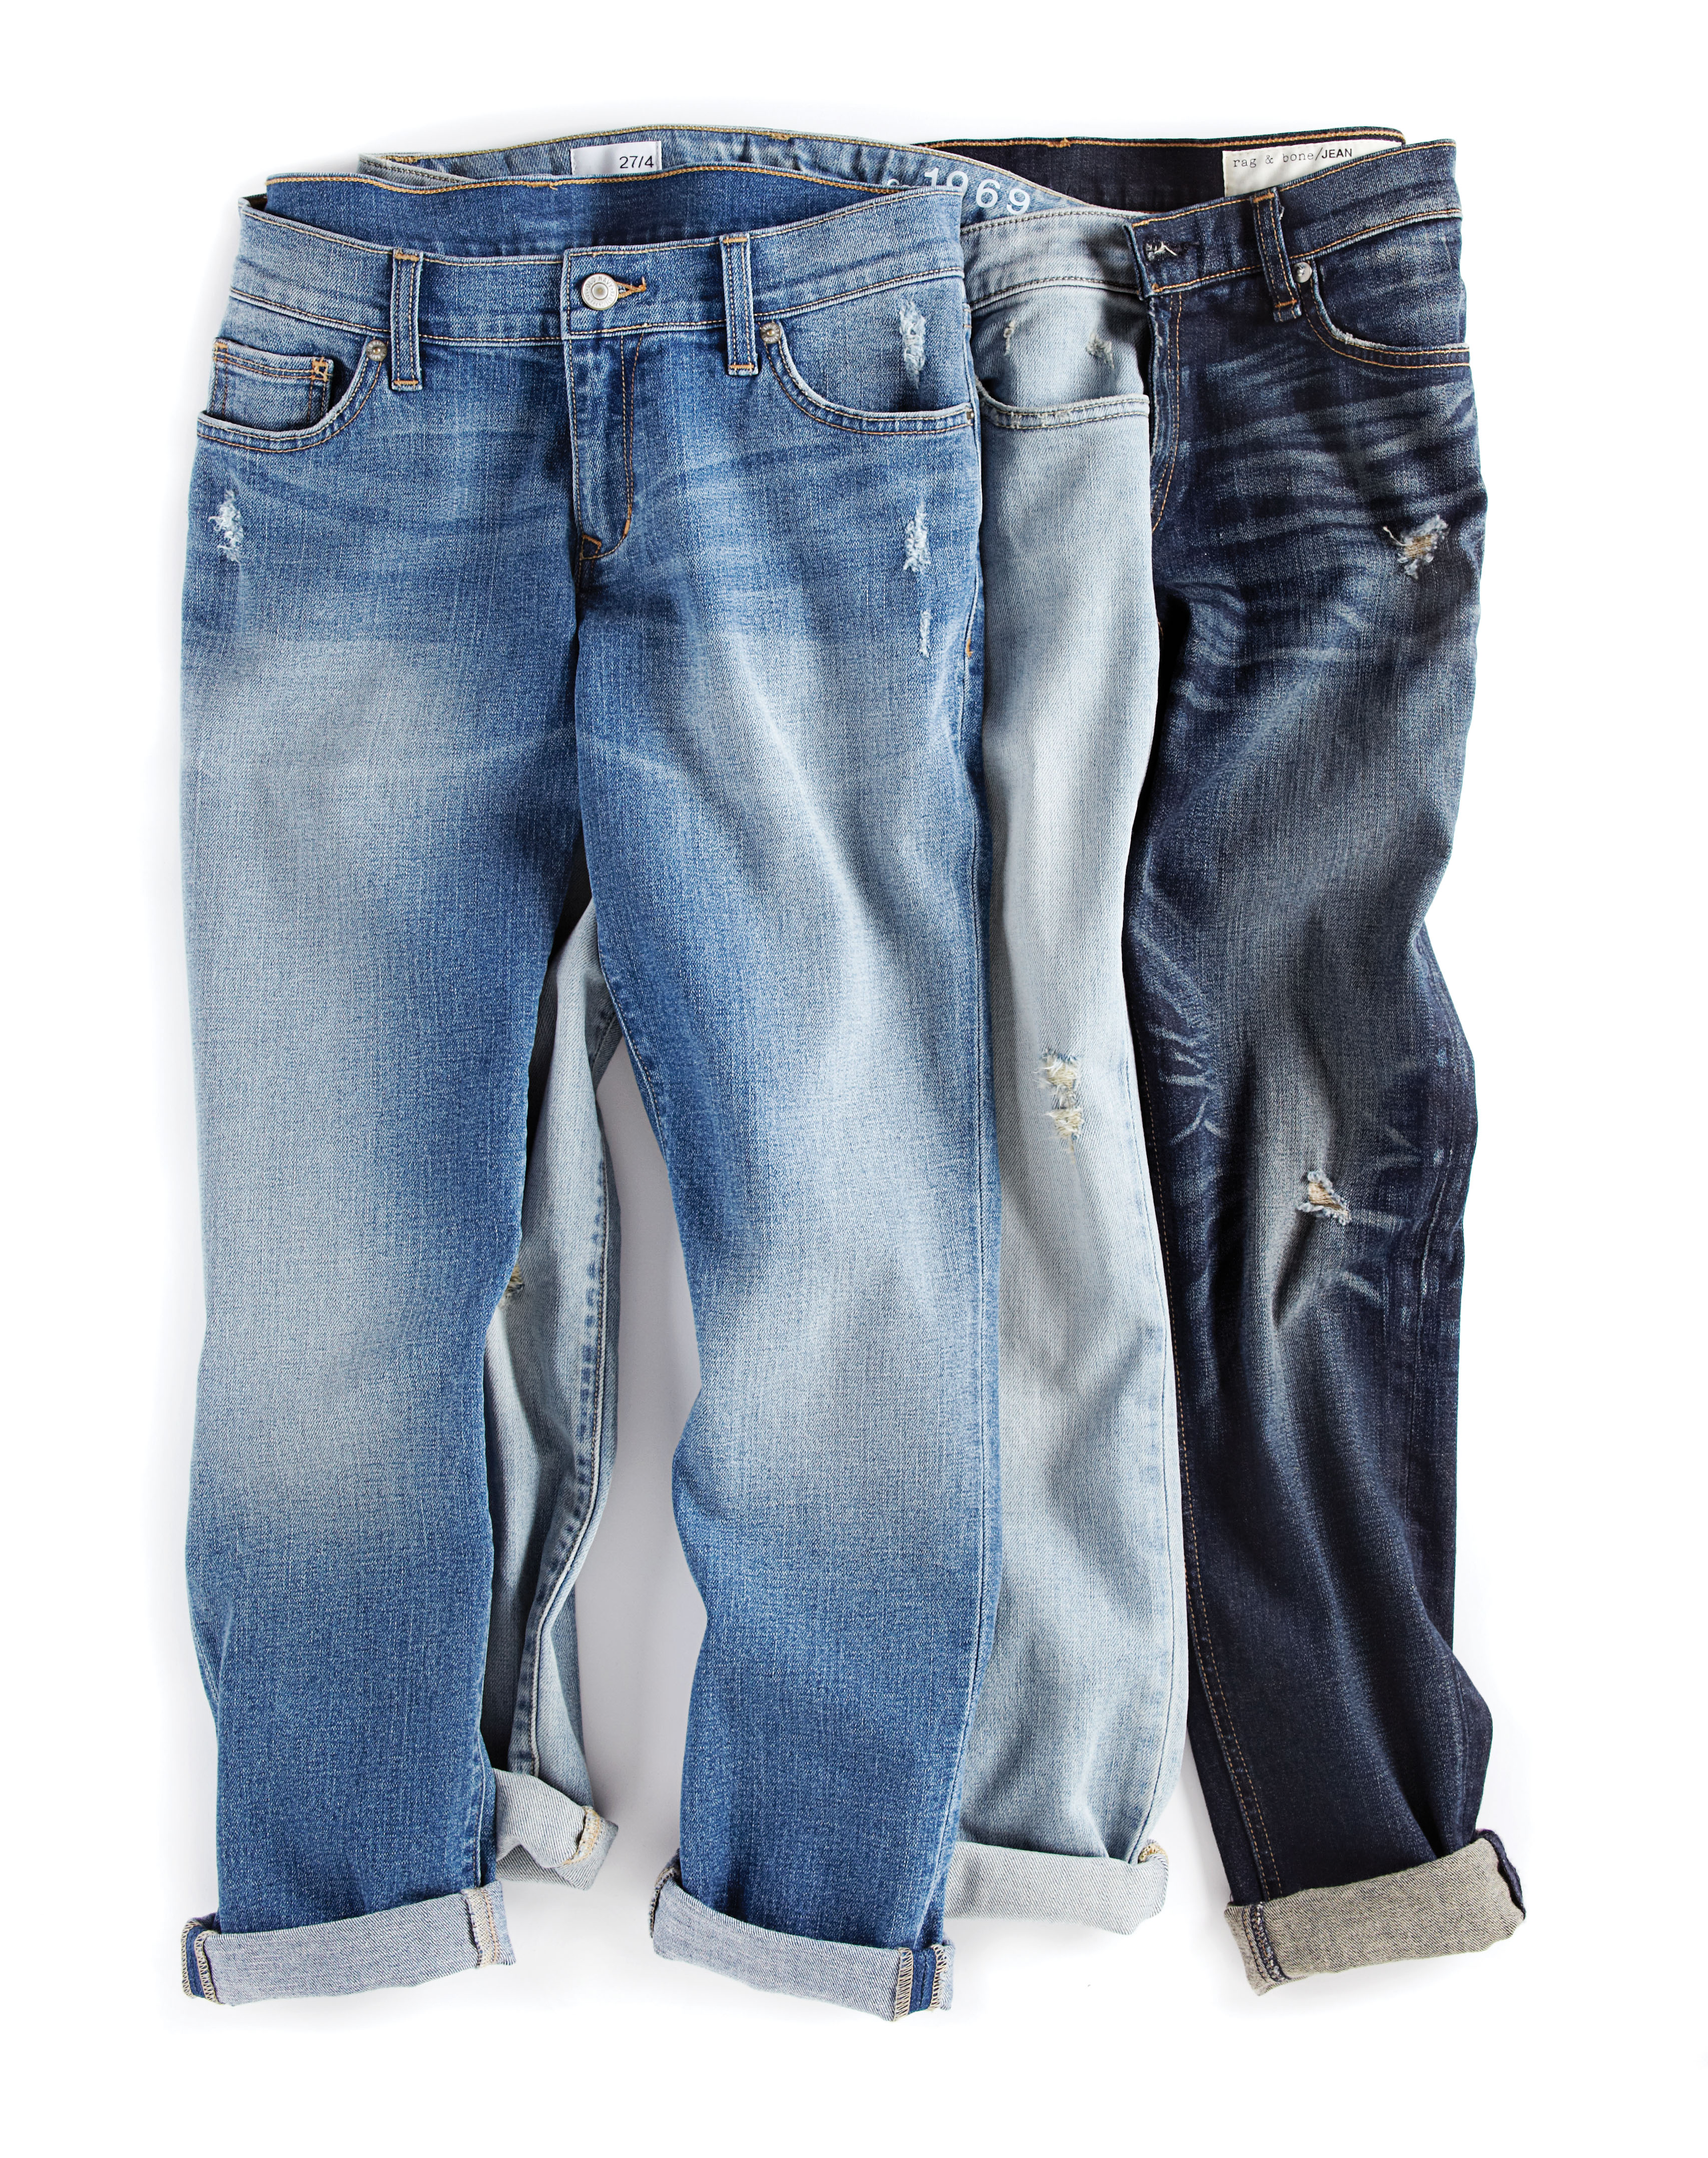 Three pairs boyfriend jeans, denim, Jan 13, p45